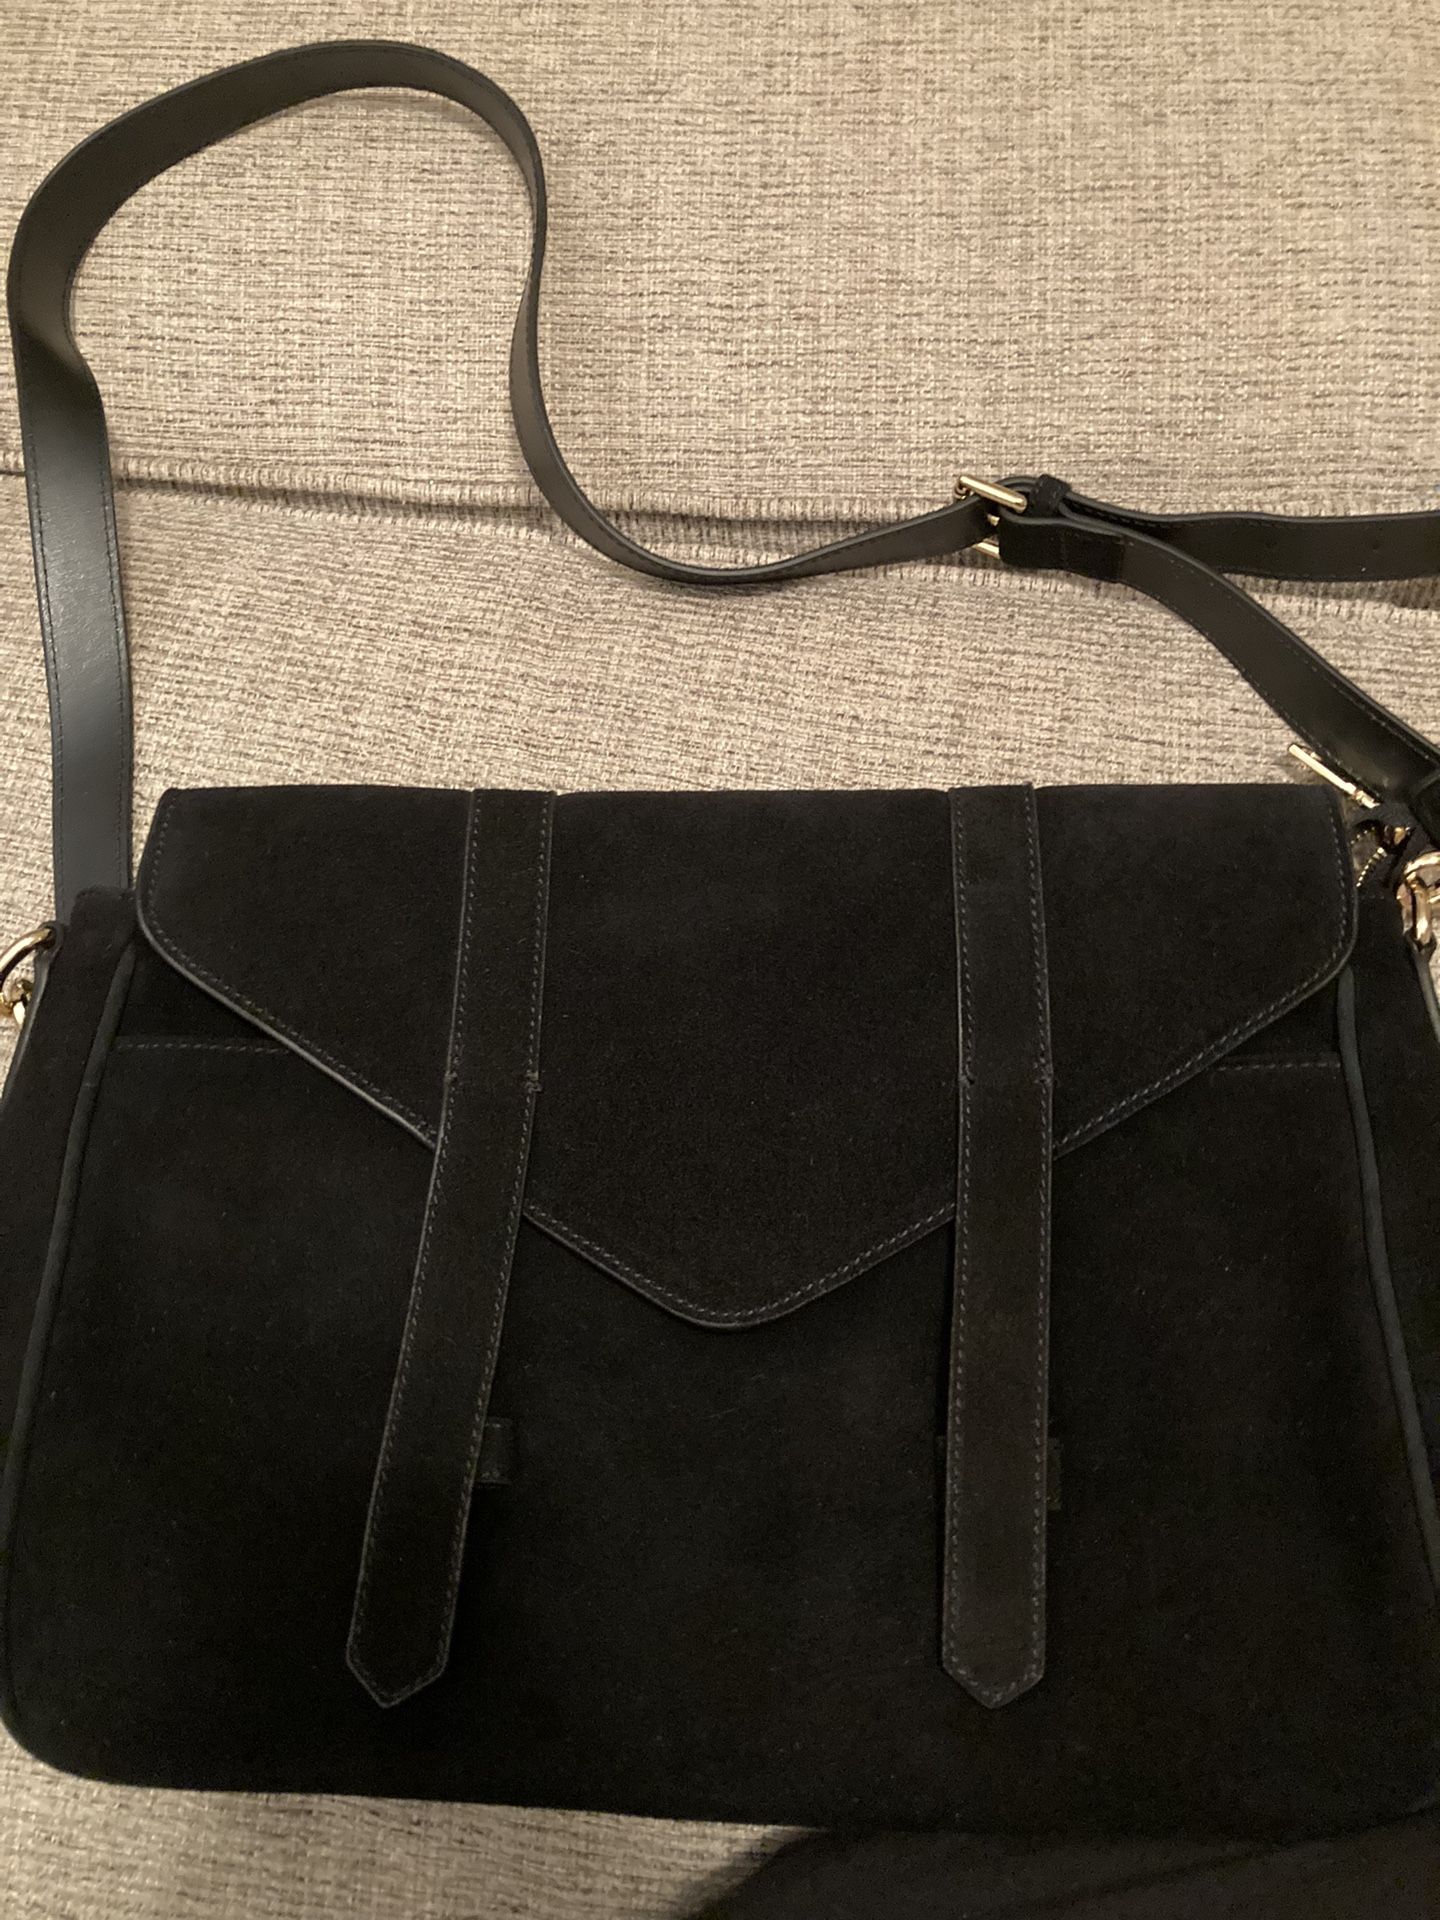 New Violetta Suede Messenger Bag